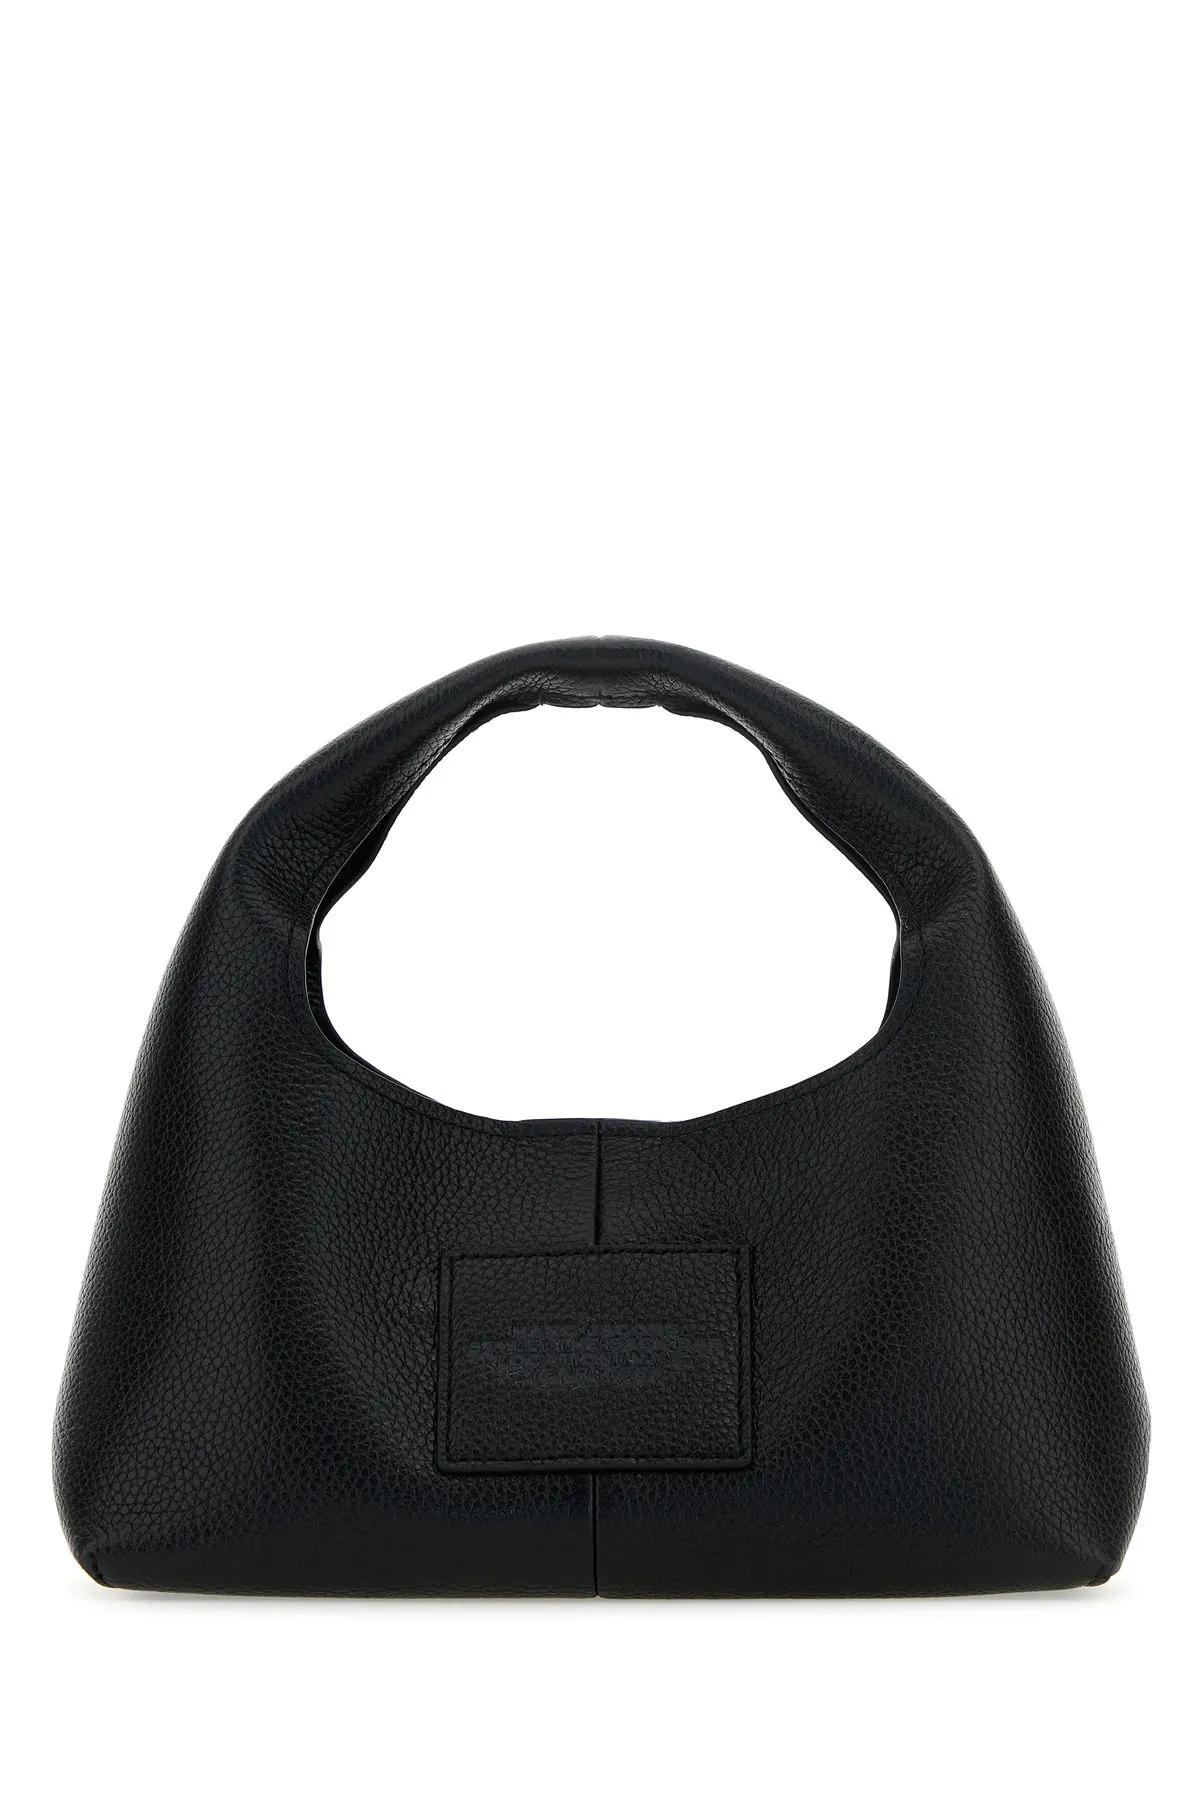 Shop Marc Jacobs Black Leather Mini The Sack Bag Handbag